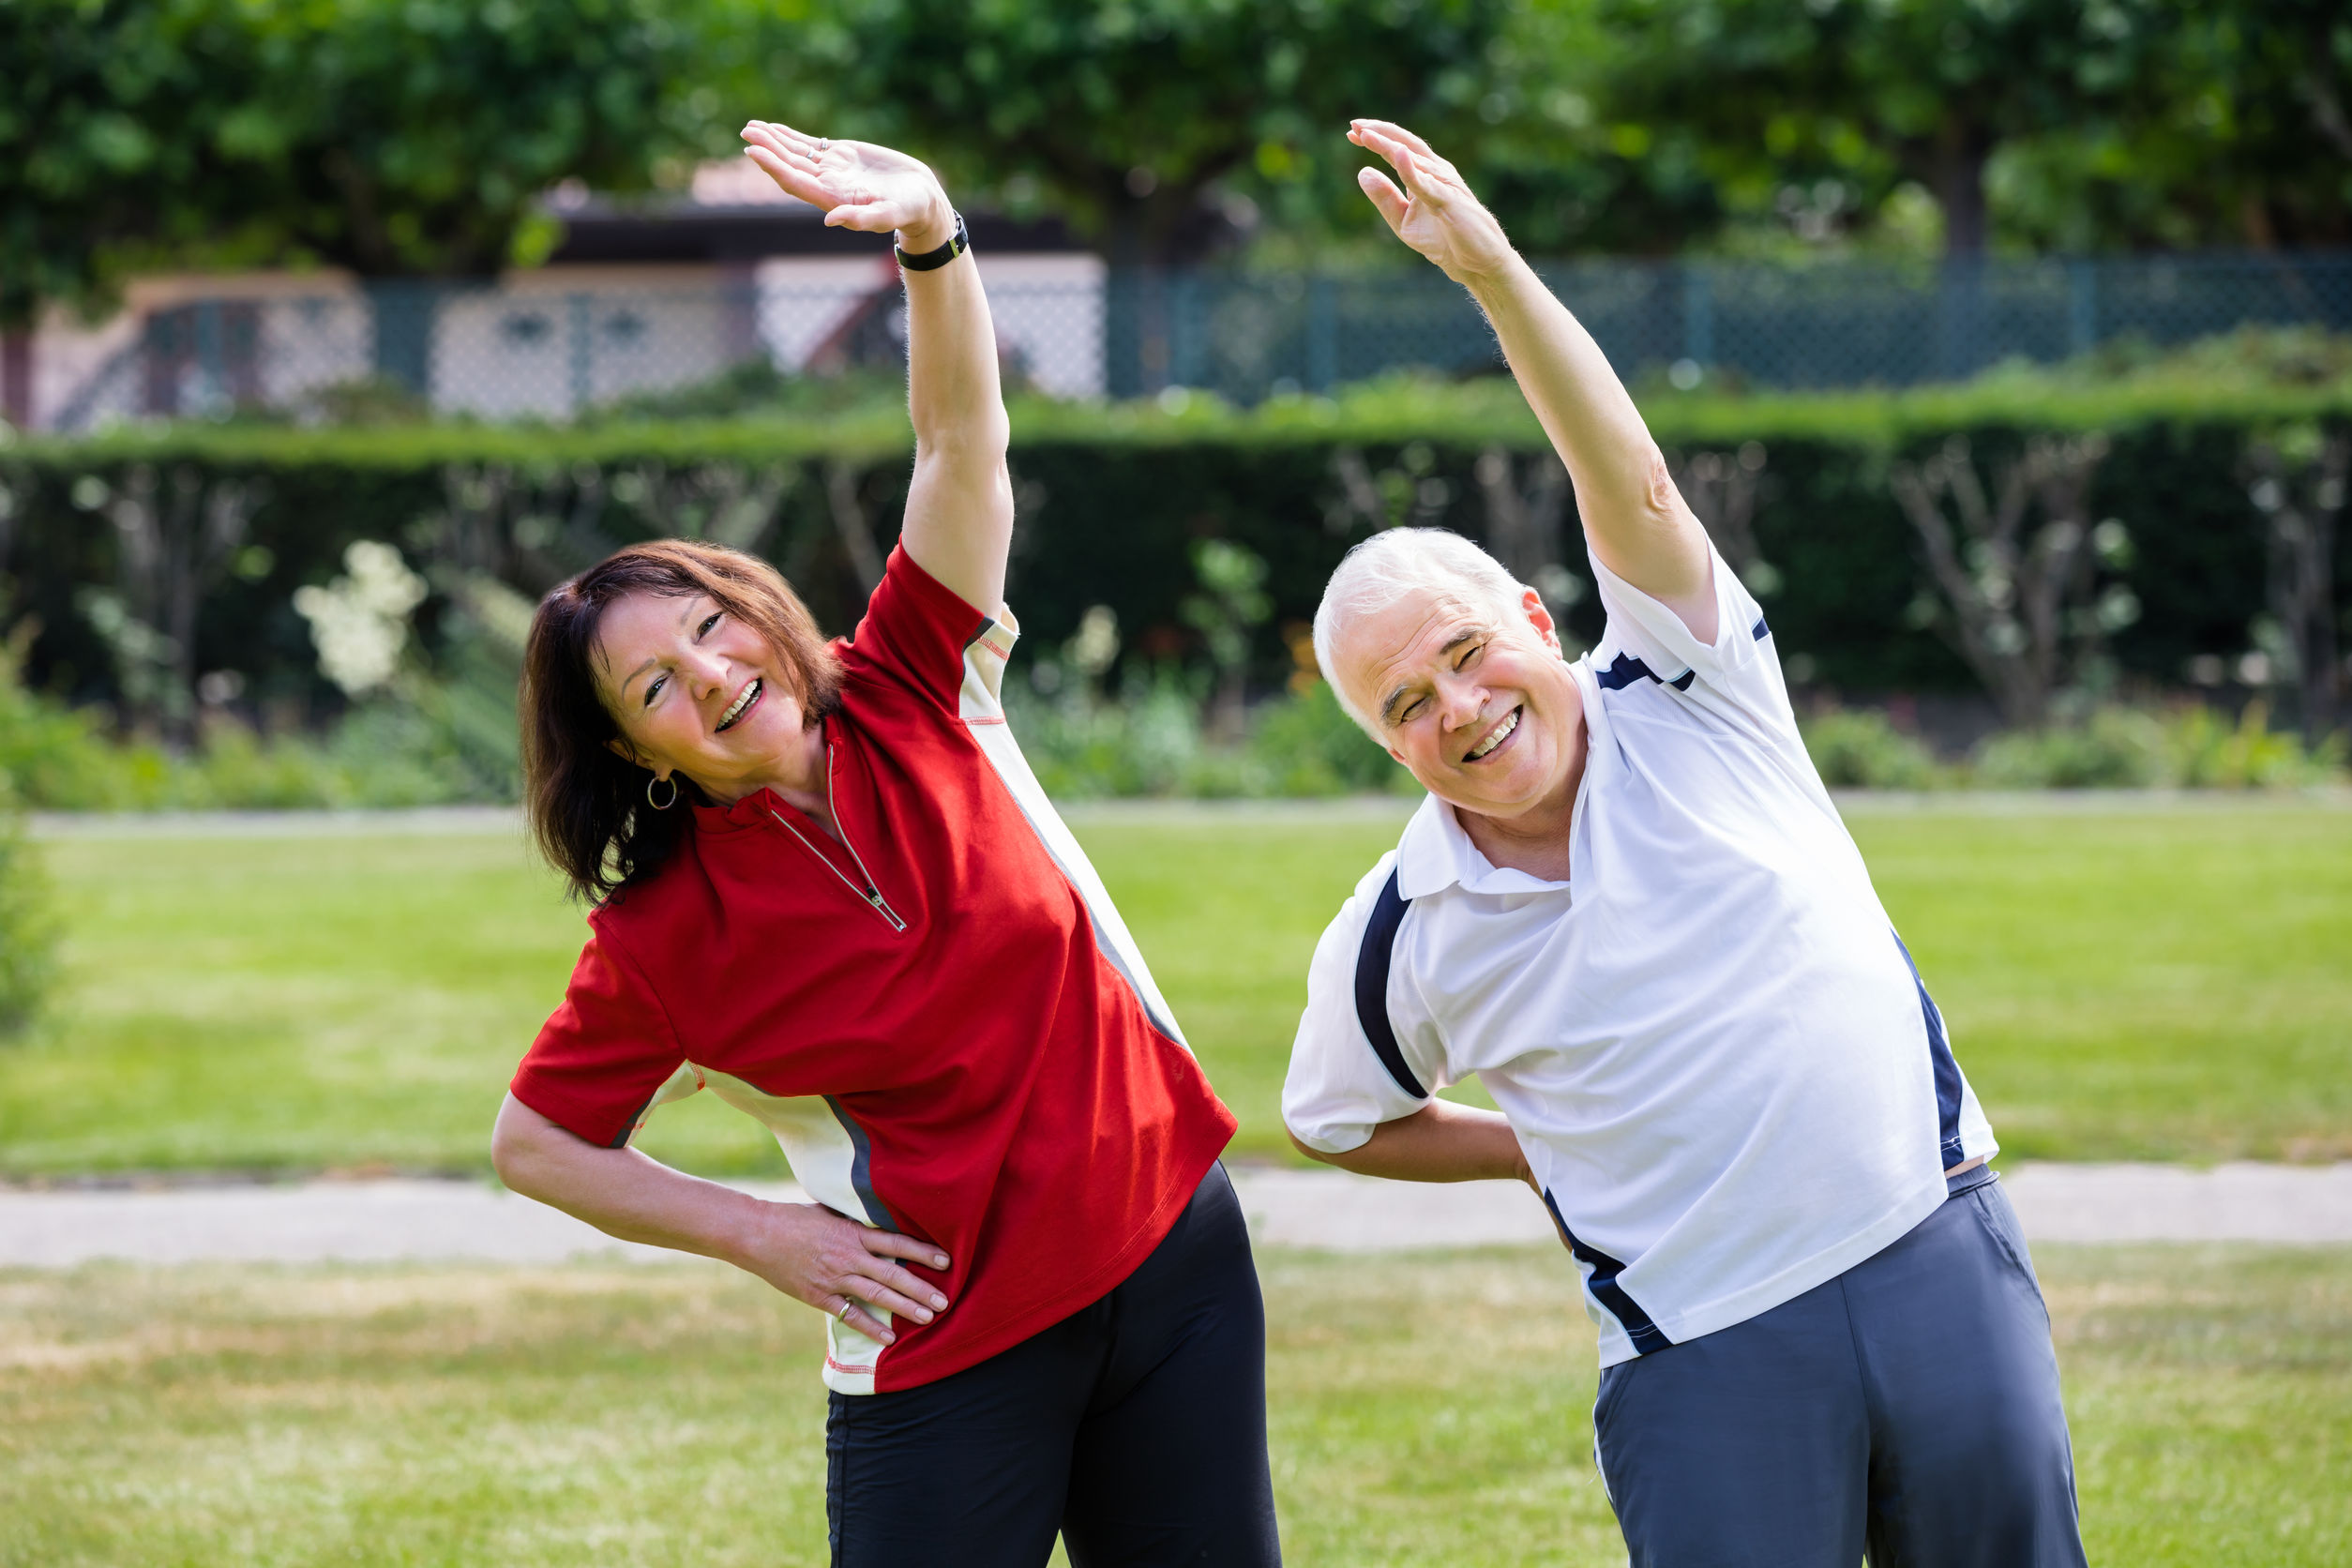 Flexibility As You Age | Princeton Nutrients